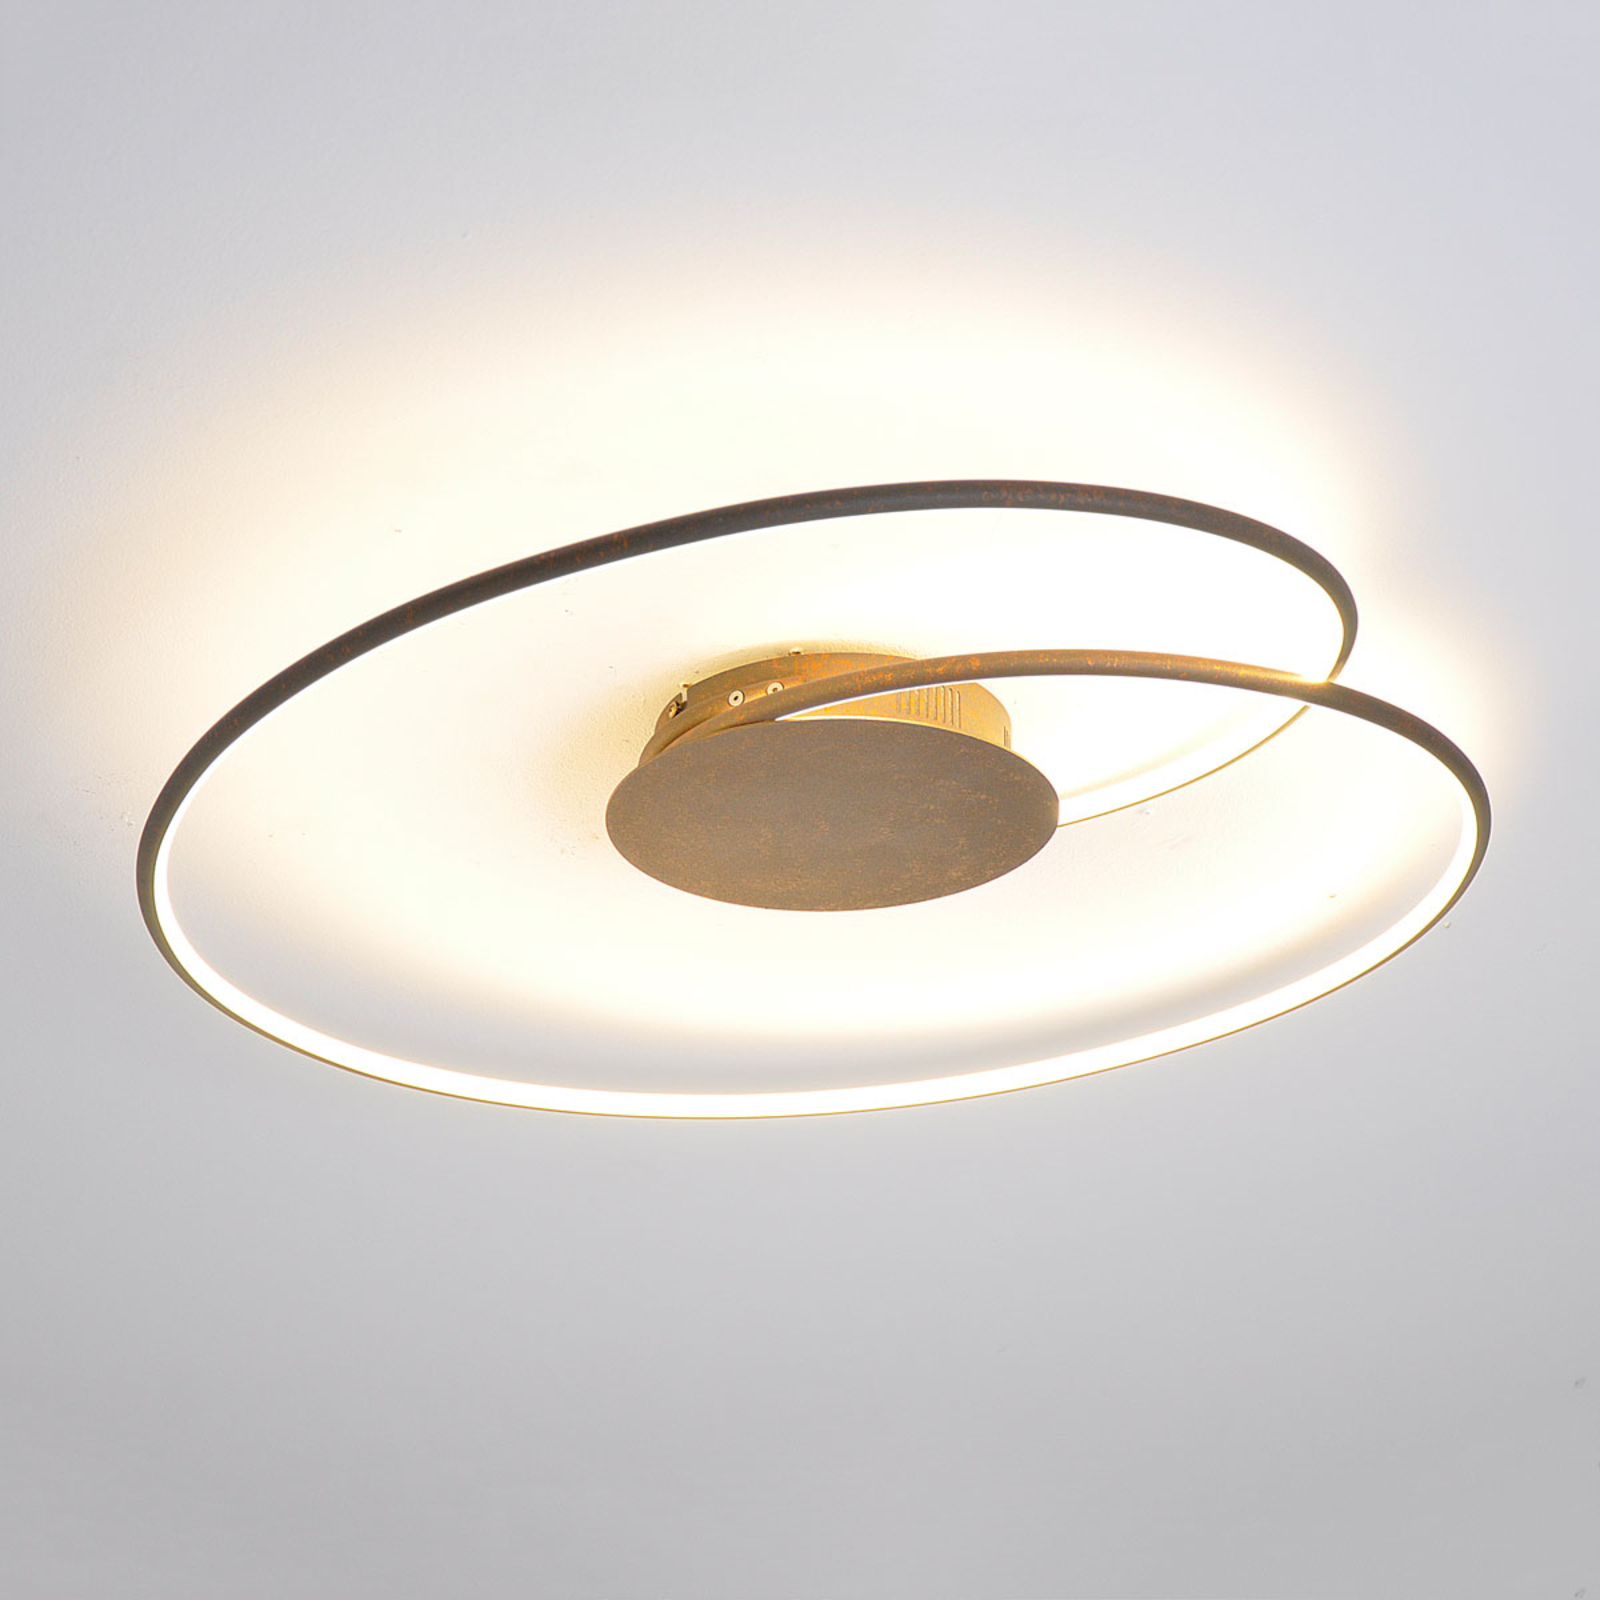 Smuk LED-loftslampe Joline i rustbrun